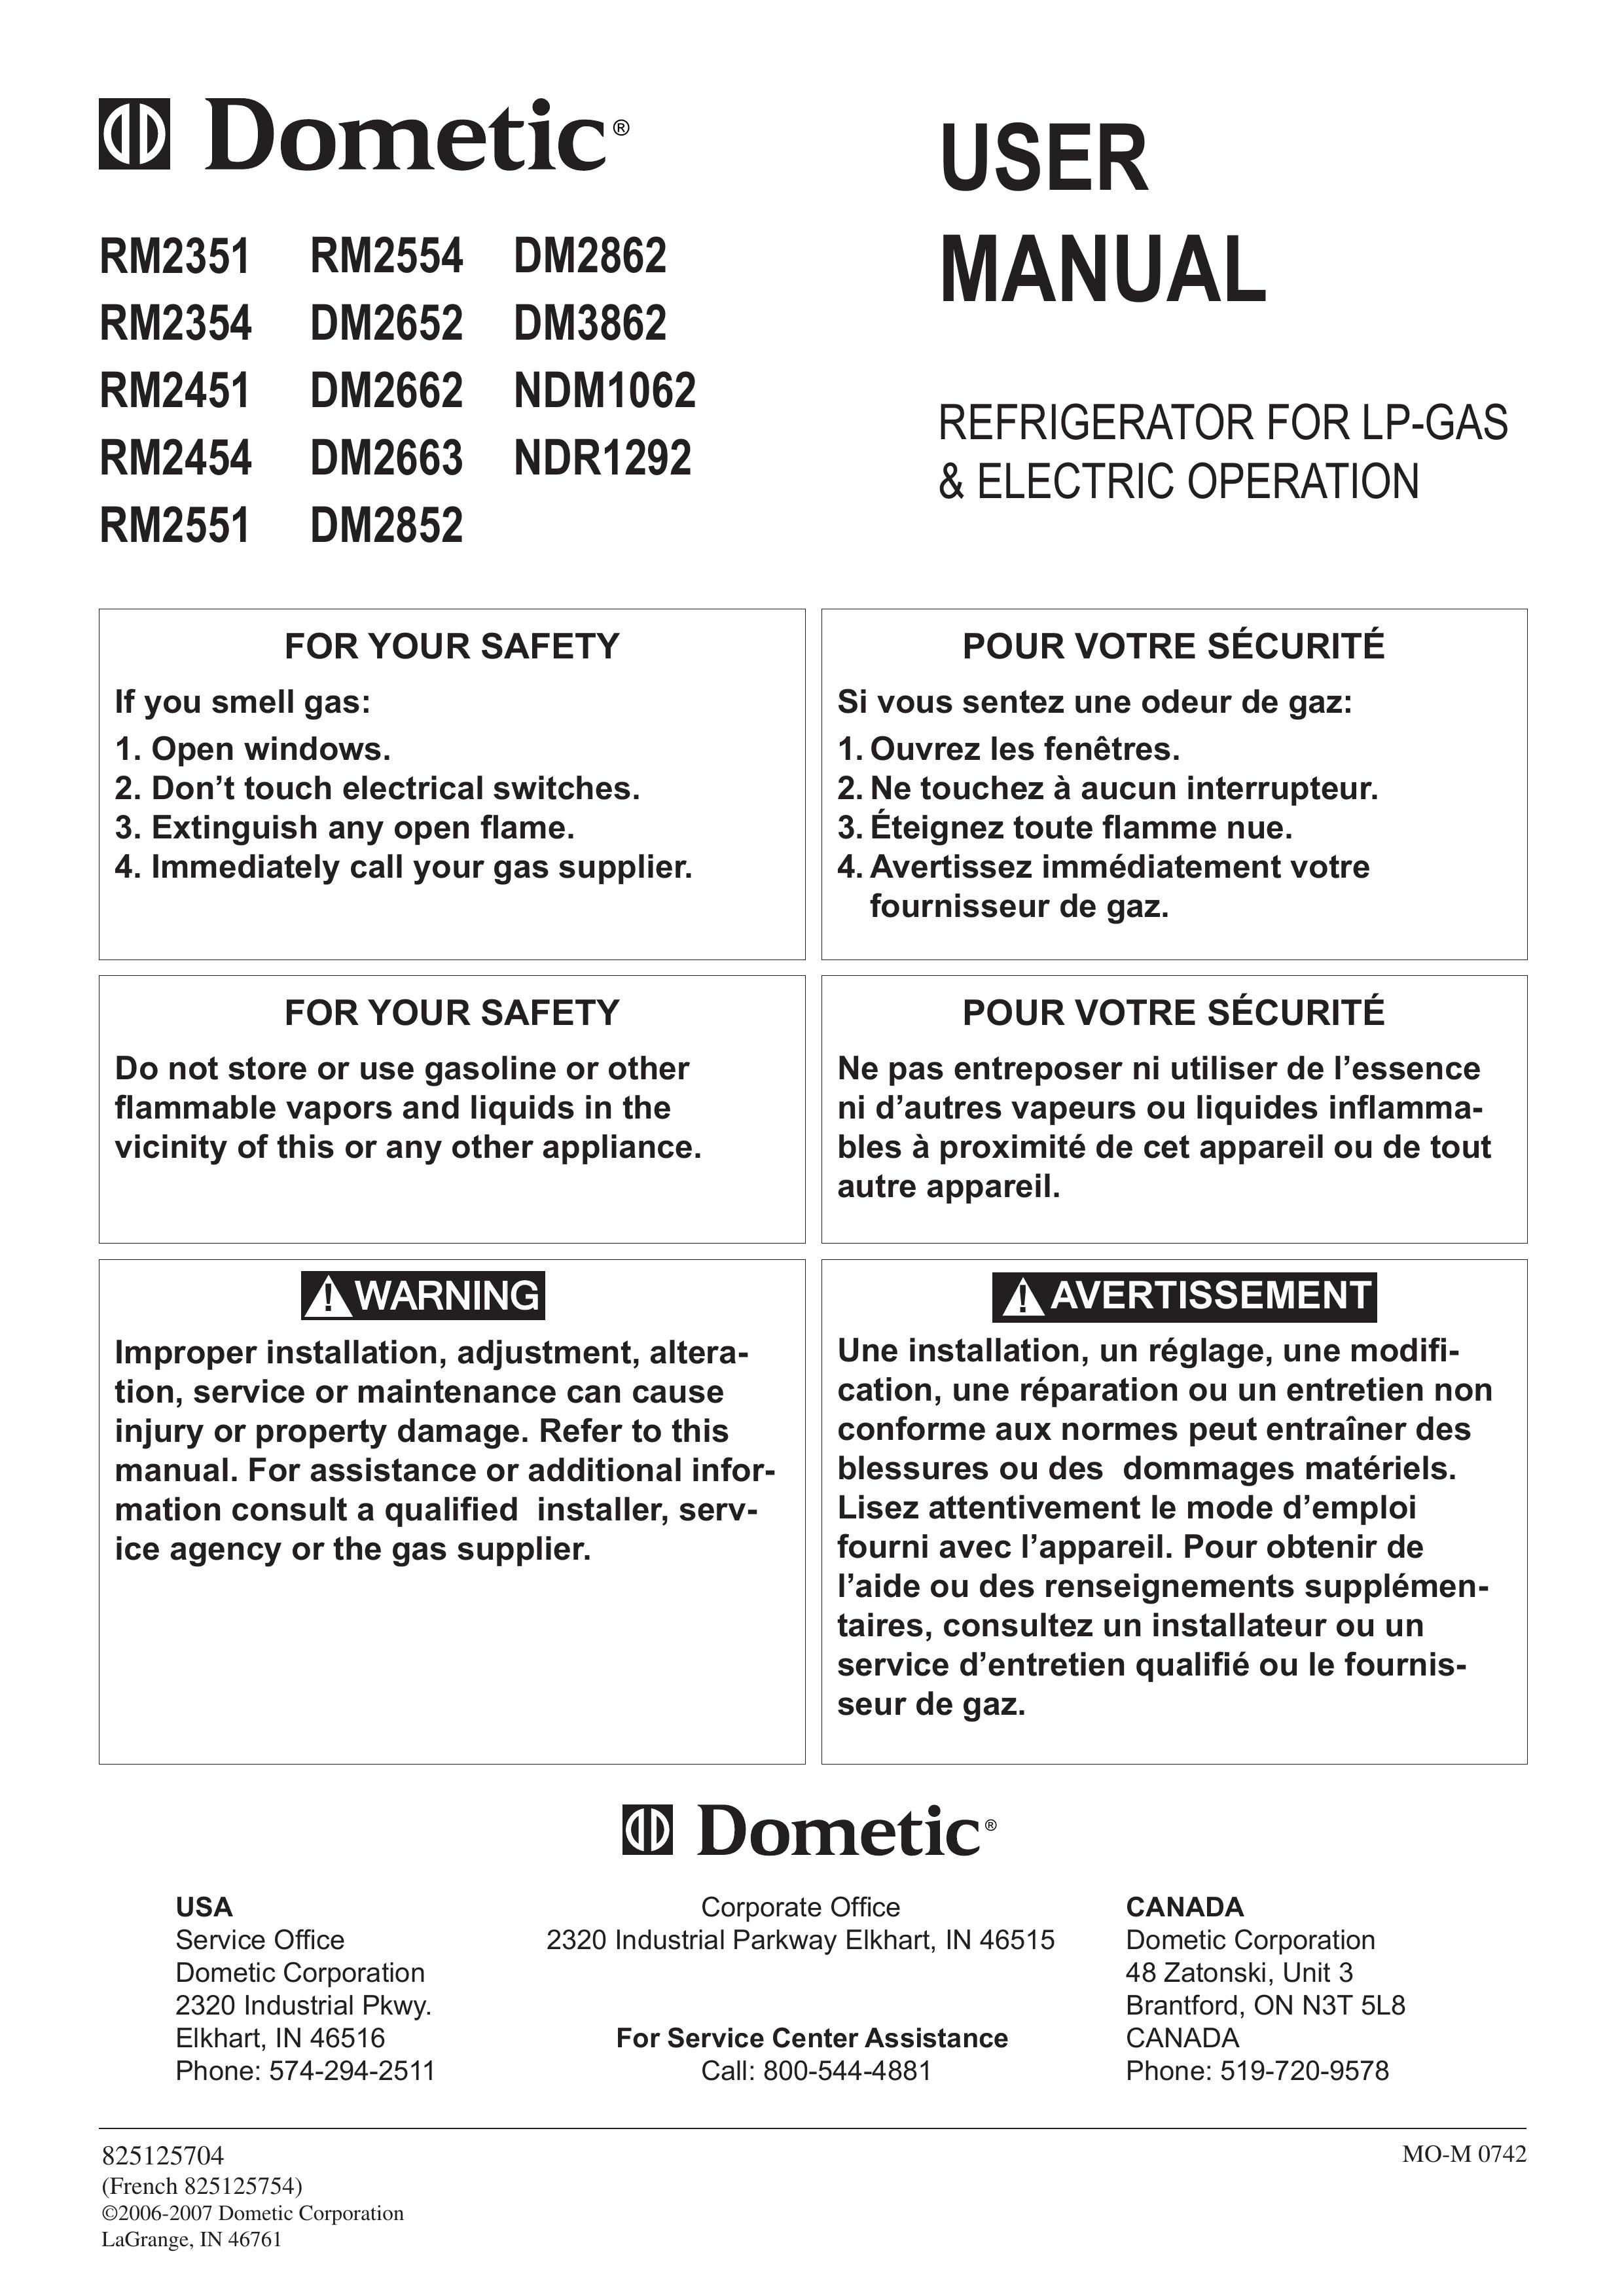 Dometic DM2663 Refrigerator User Manual